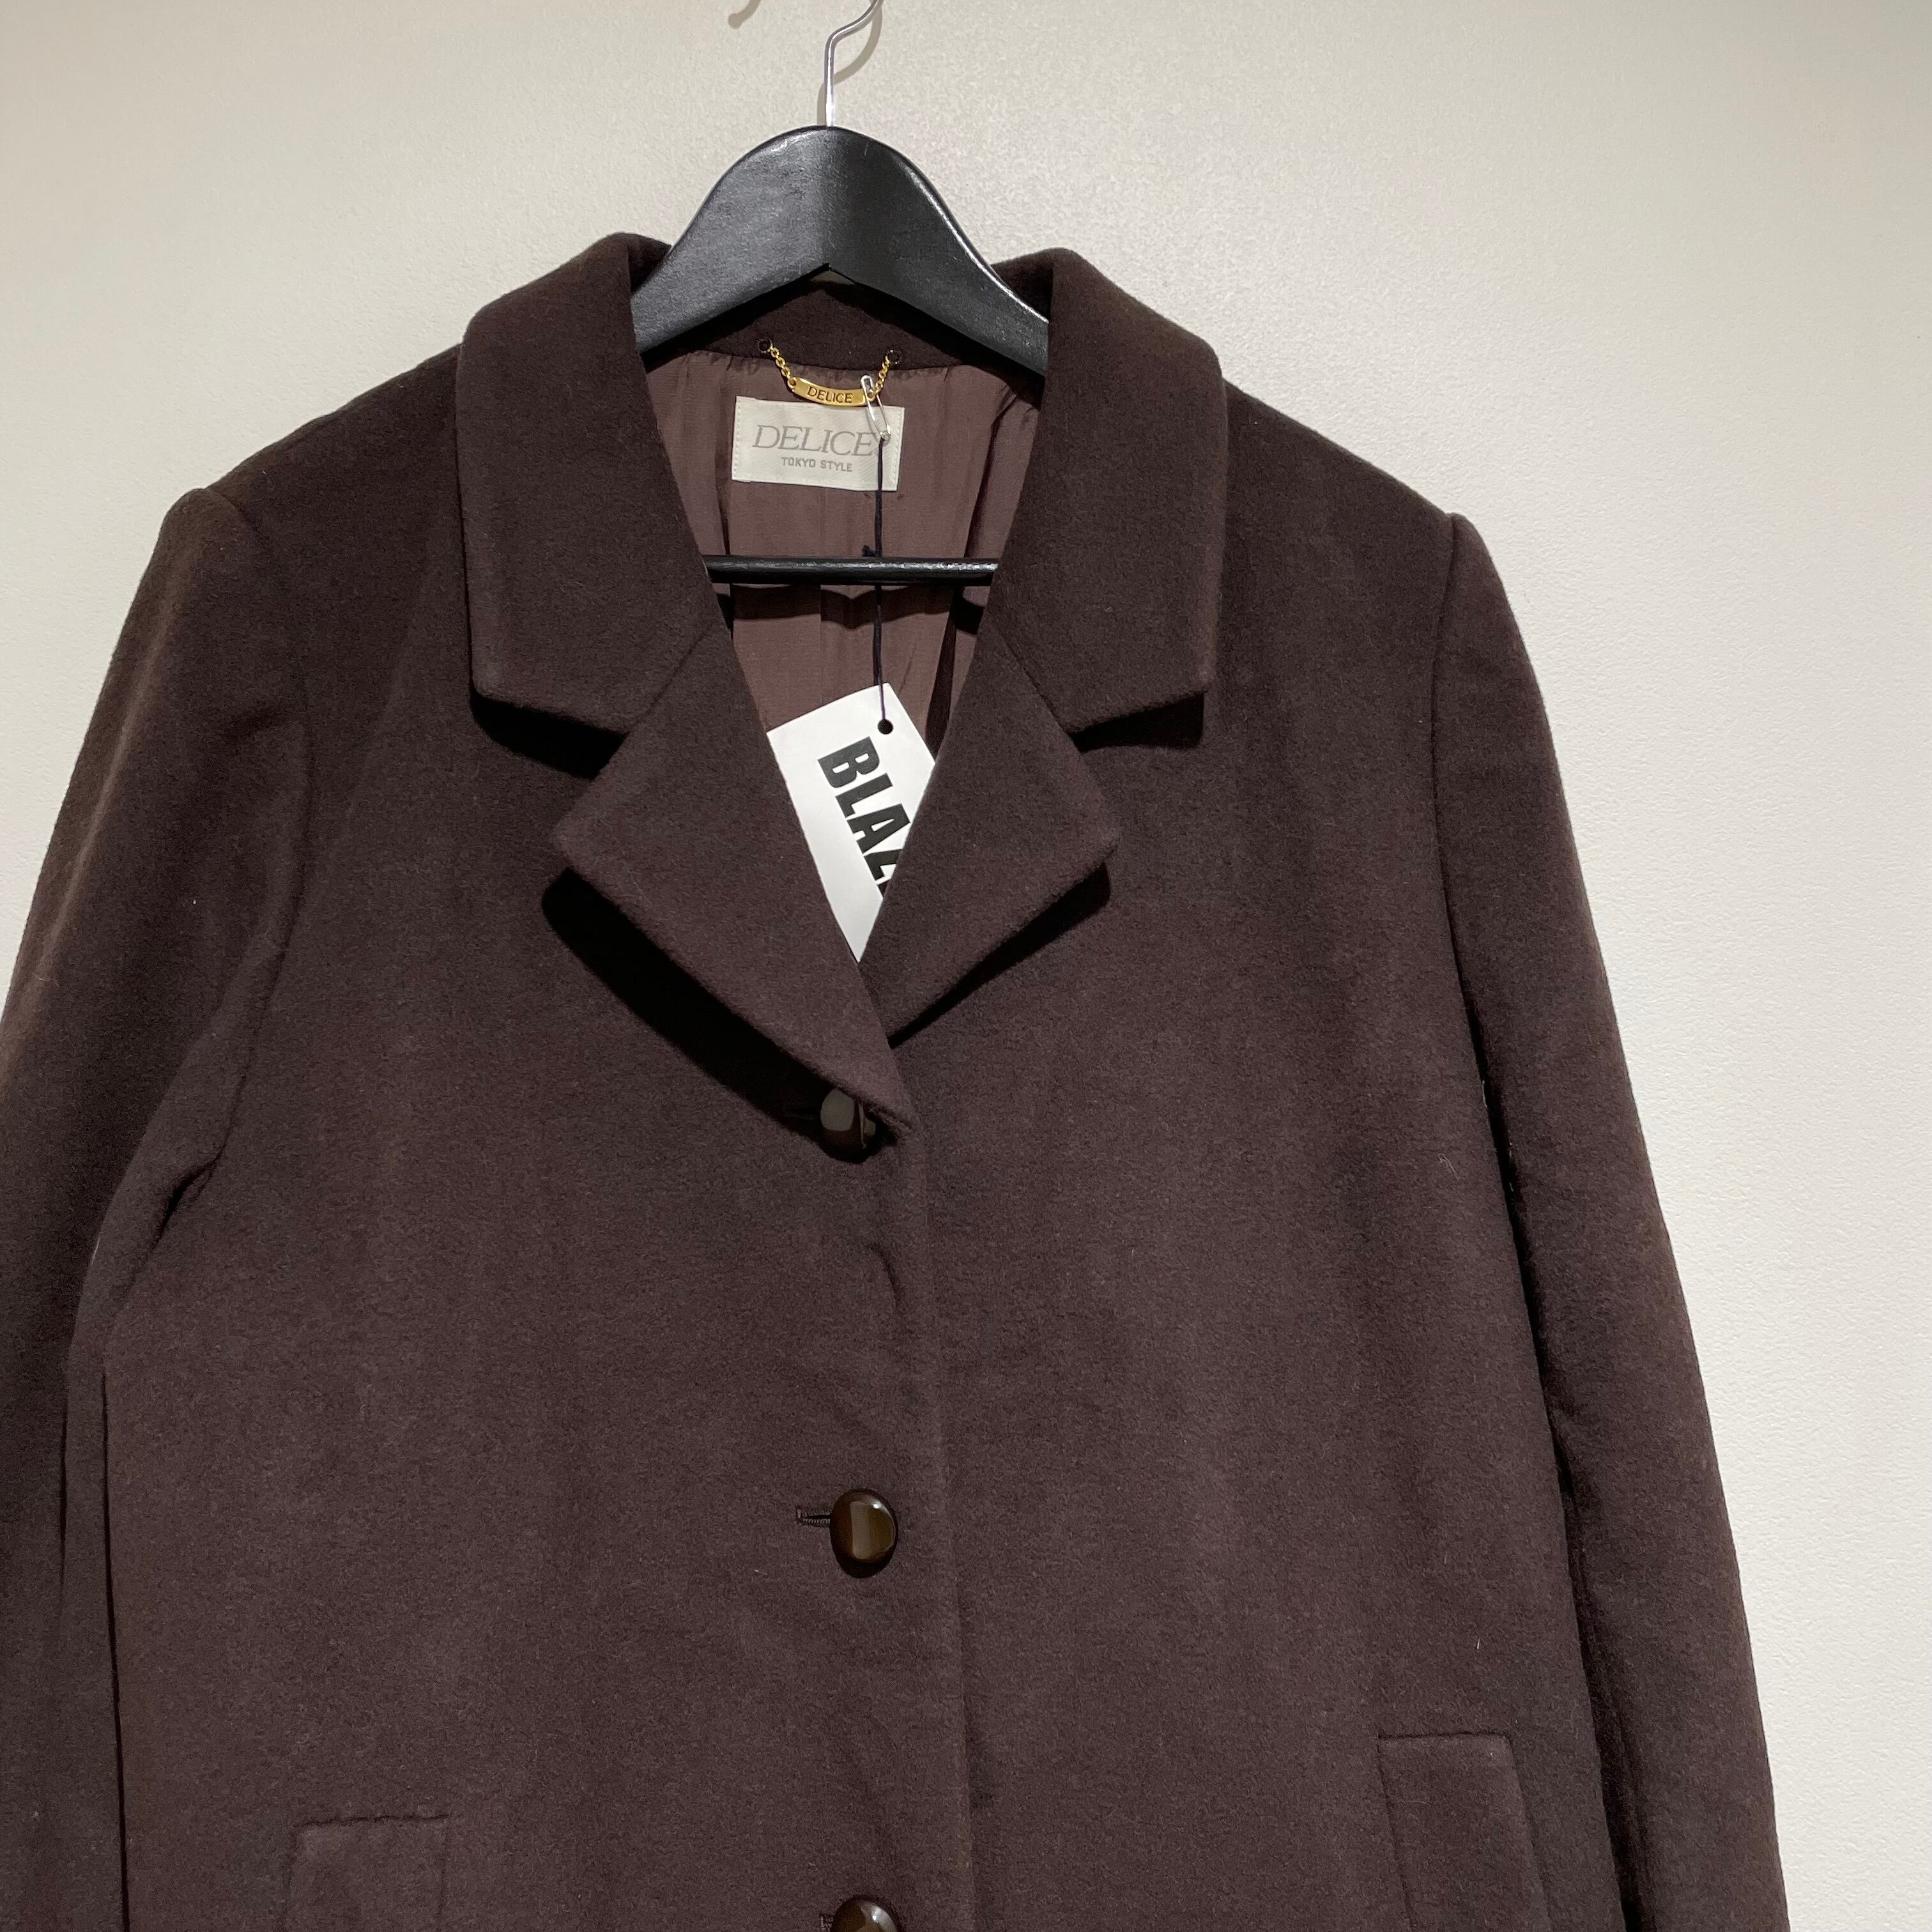 19605 DELICE tokyo style coat | blazetorwest